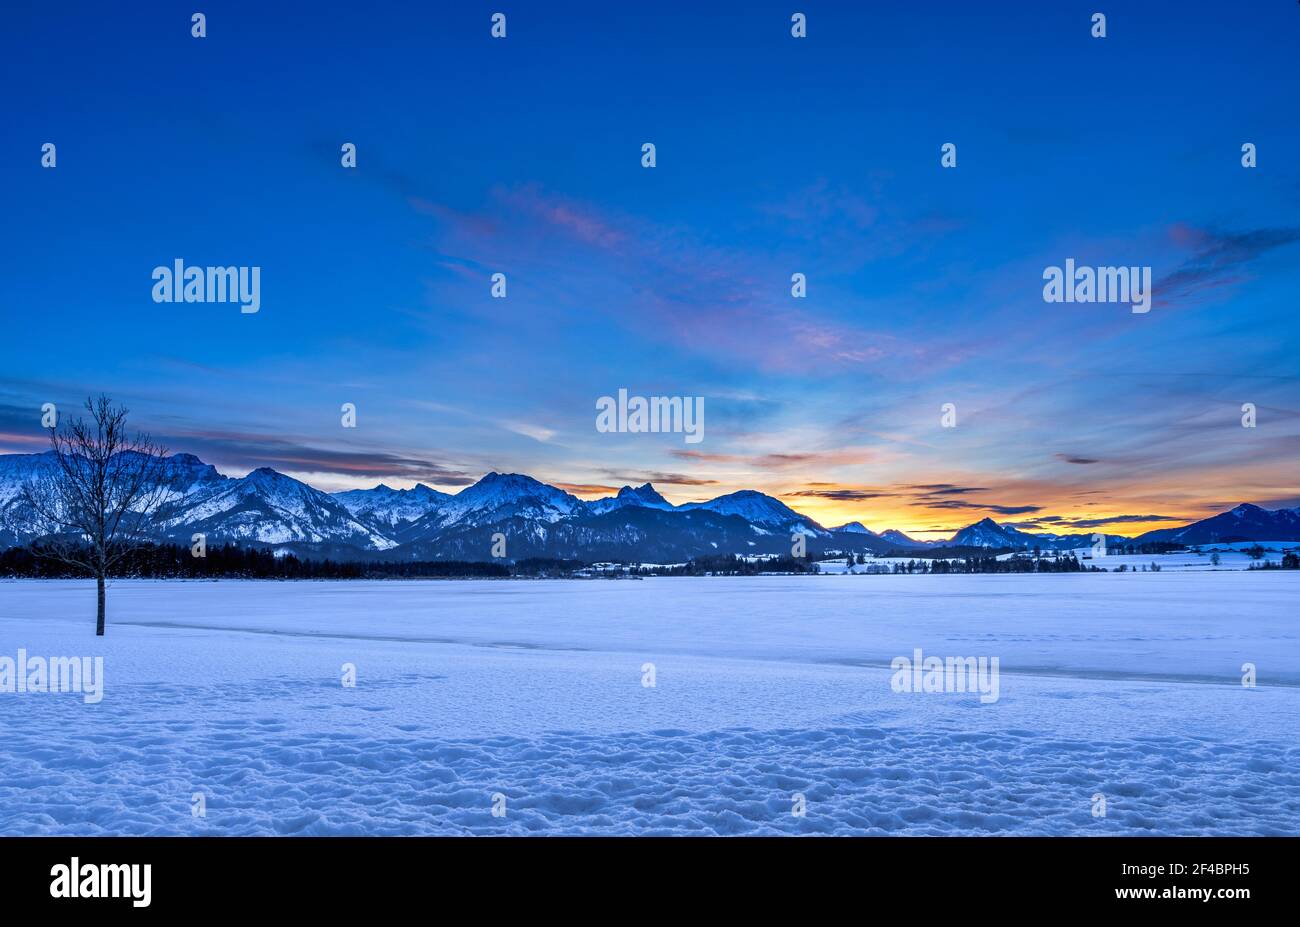 Frozen Hopfensee in inverno, a Hopfen am See, Allgau, Swabia, Baviera, Germania, Europa Foto Stock